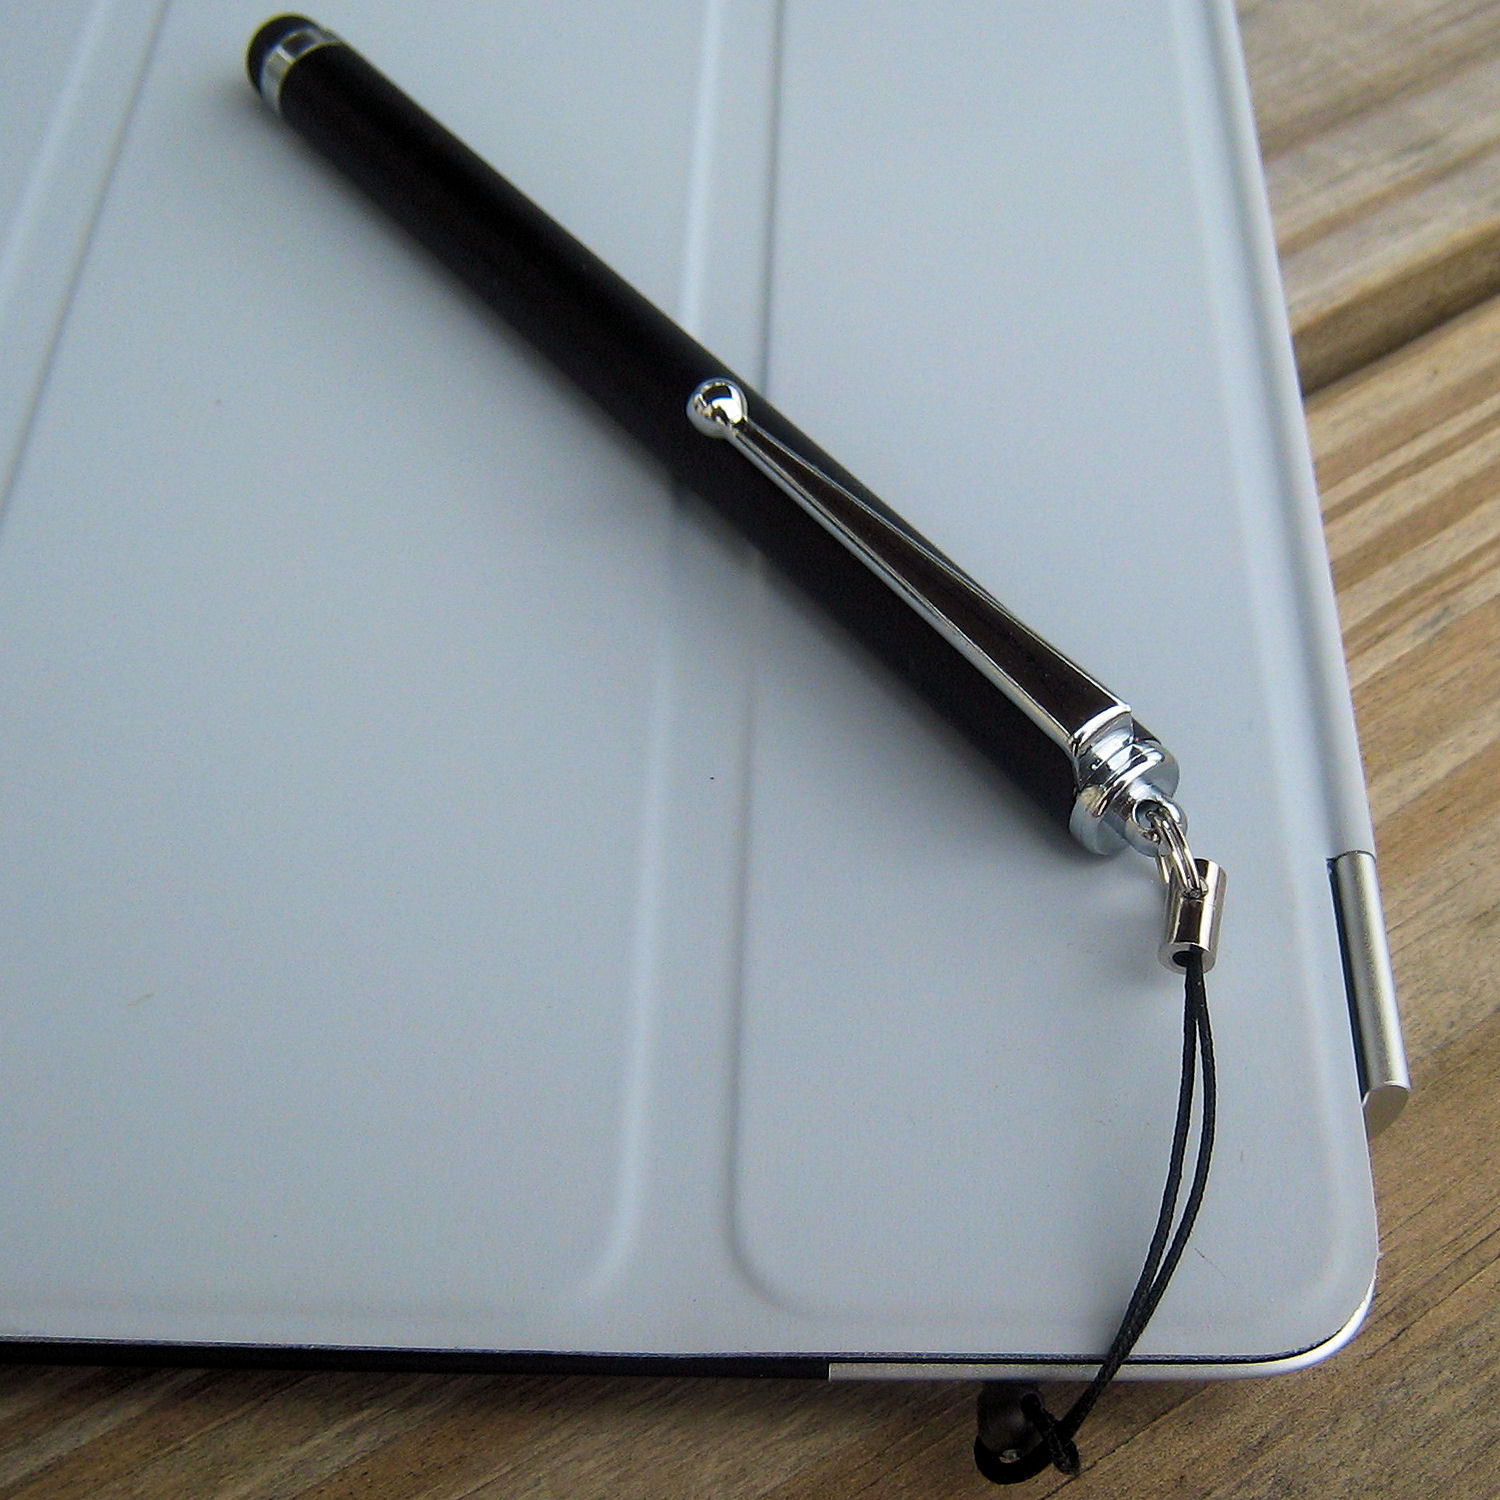 Gomadic Precision Tip Capacitive Stylus Pen designed for the ZTE Grand X  (Black Color) - Lifetime Warranty